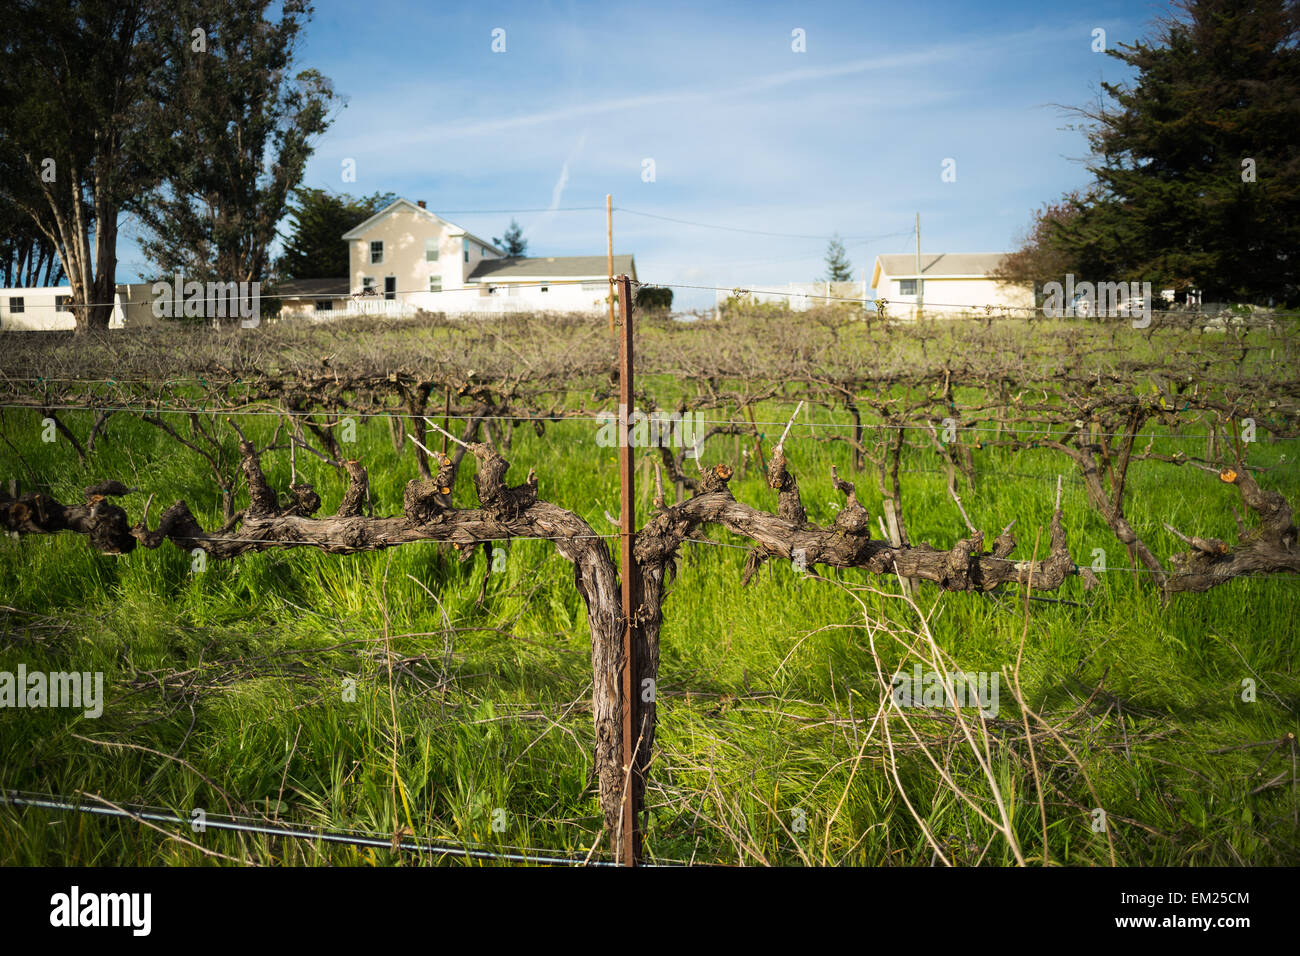 Small vineyard dormant off-season during drought Stock Photo